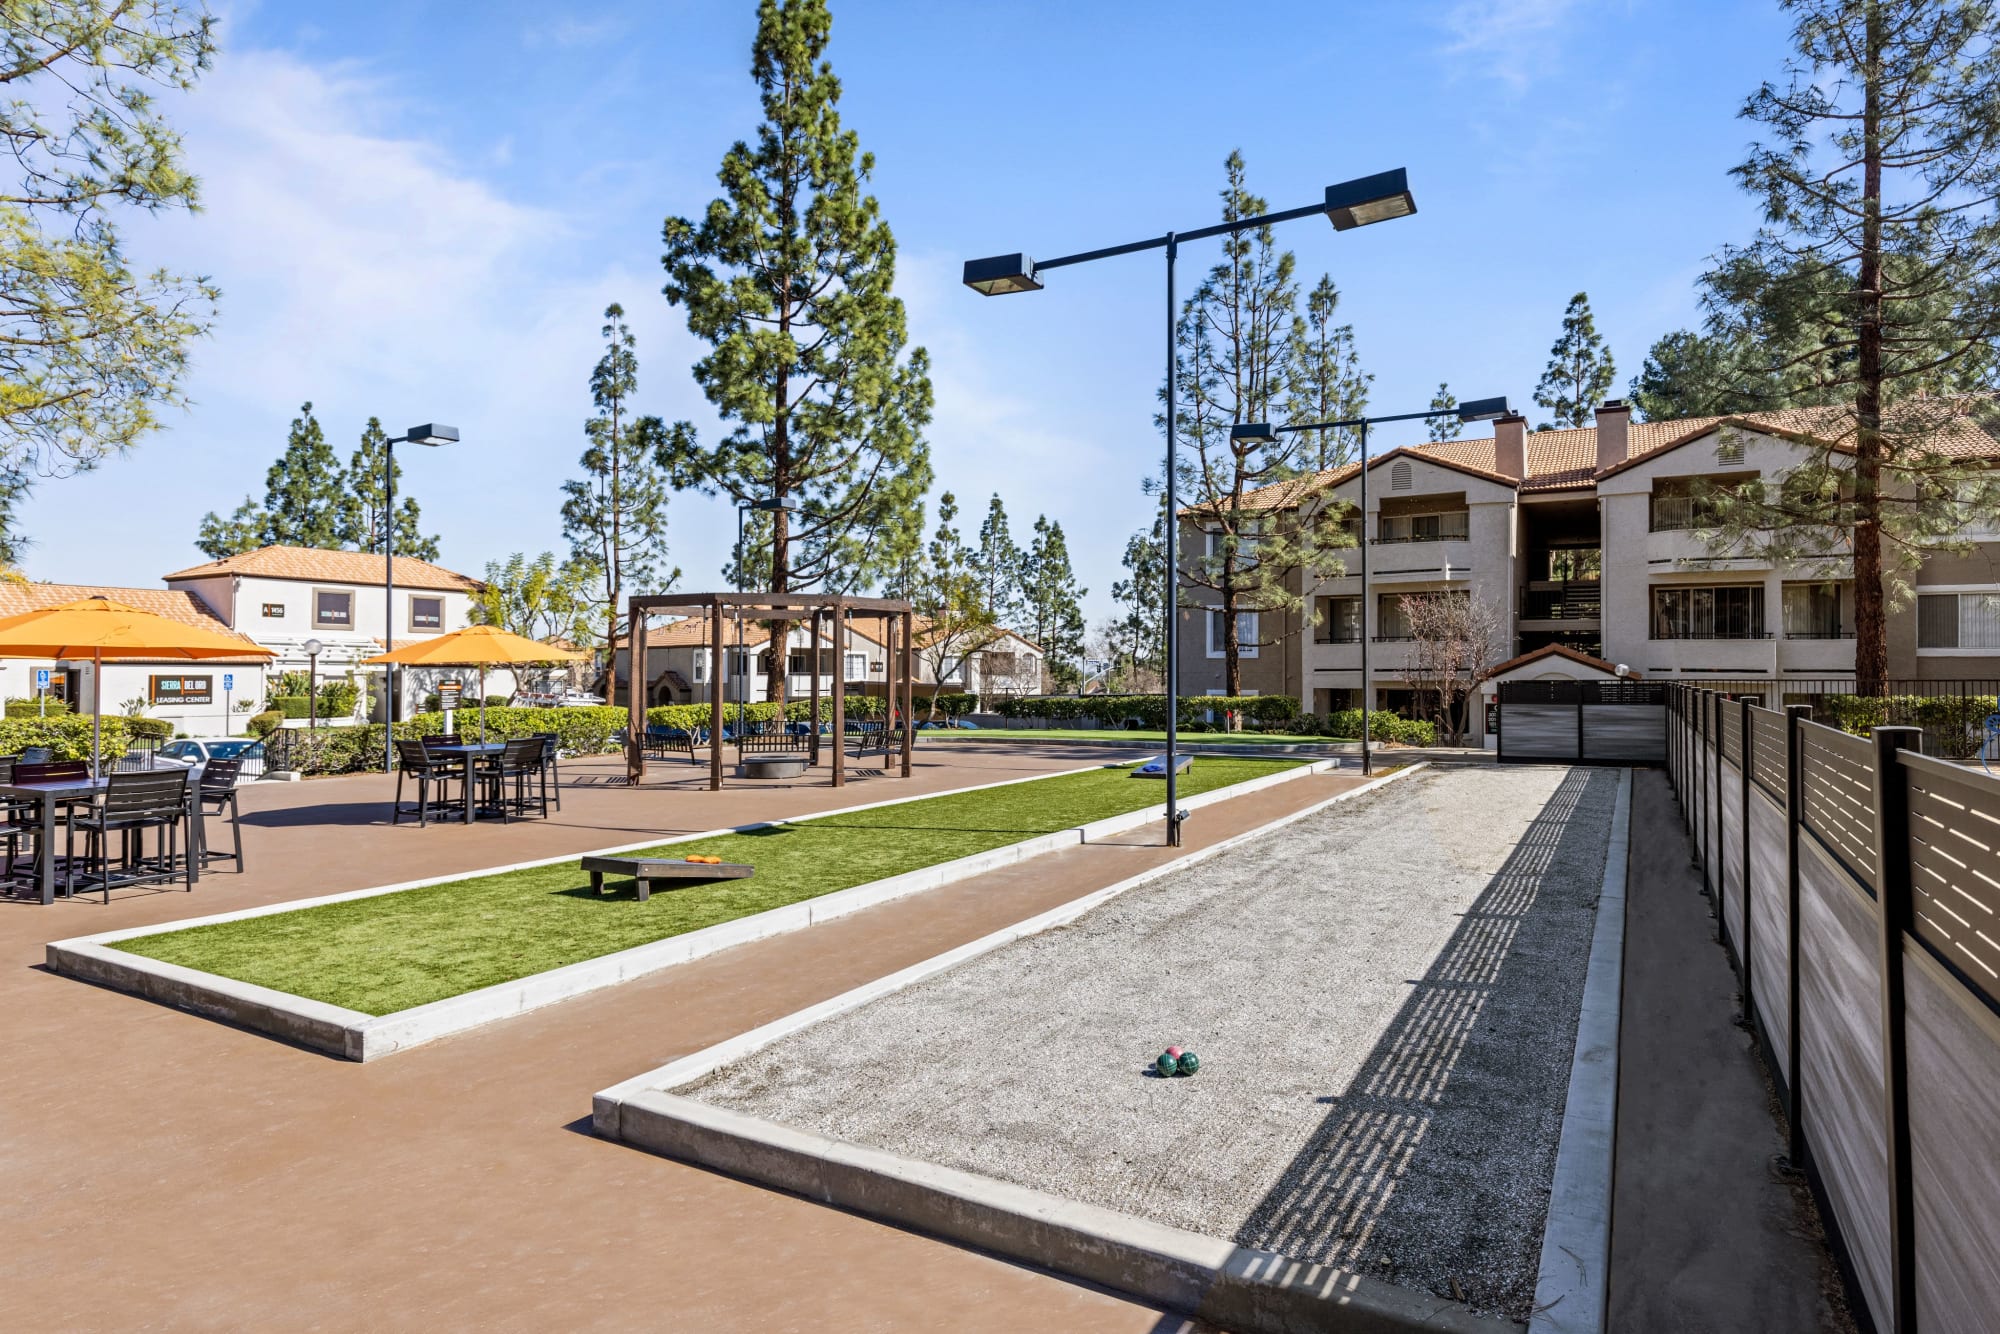 Bocce ball court at Sierra Del Oro Apartments in Corona, California